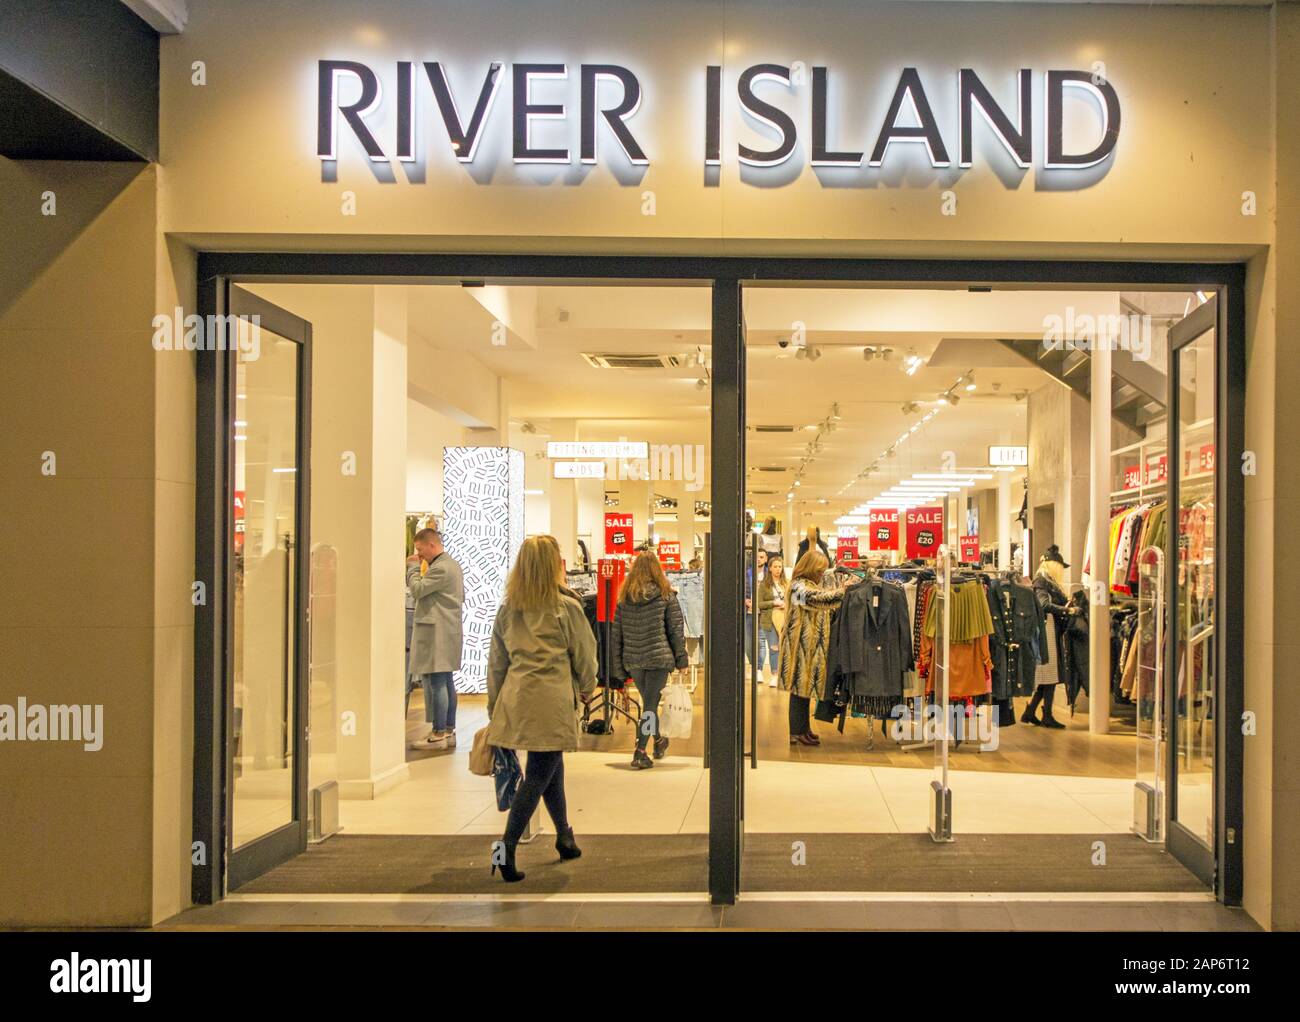 High street fashion clothes retail chain shop River Island Stock Photo -  Alamy